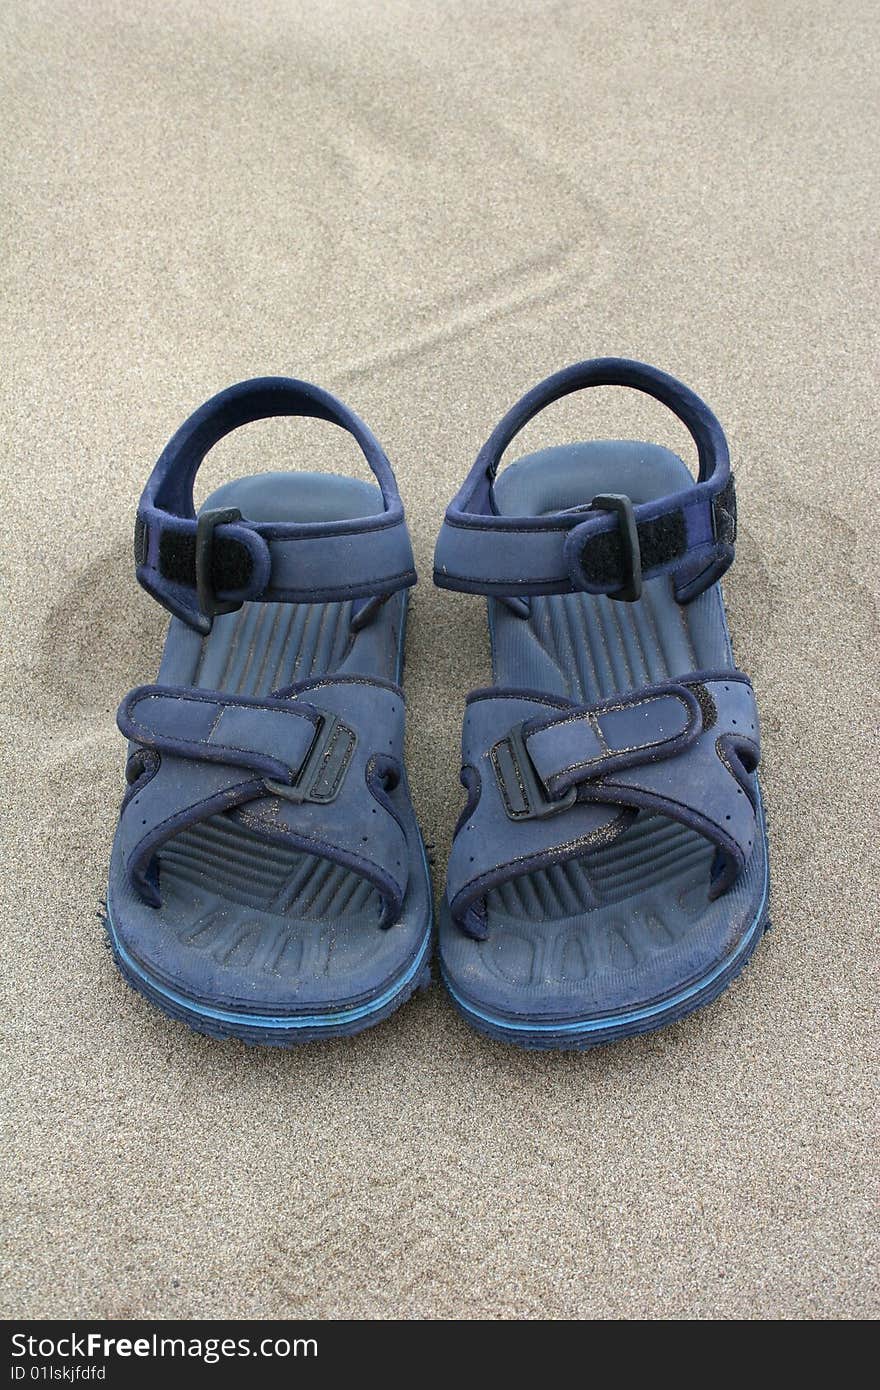 Blue beach sandals on the sand